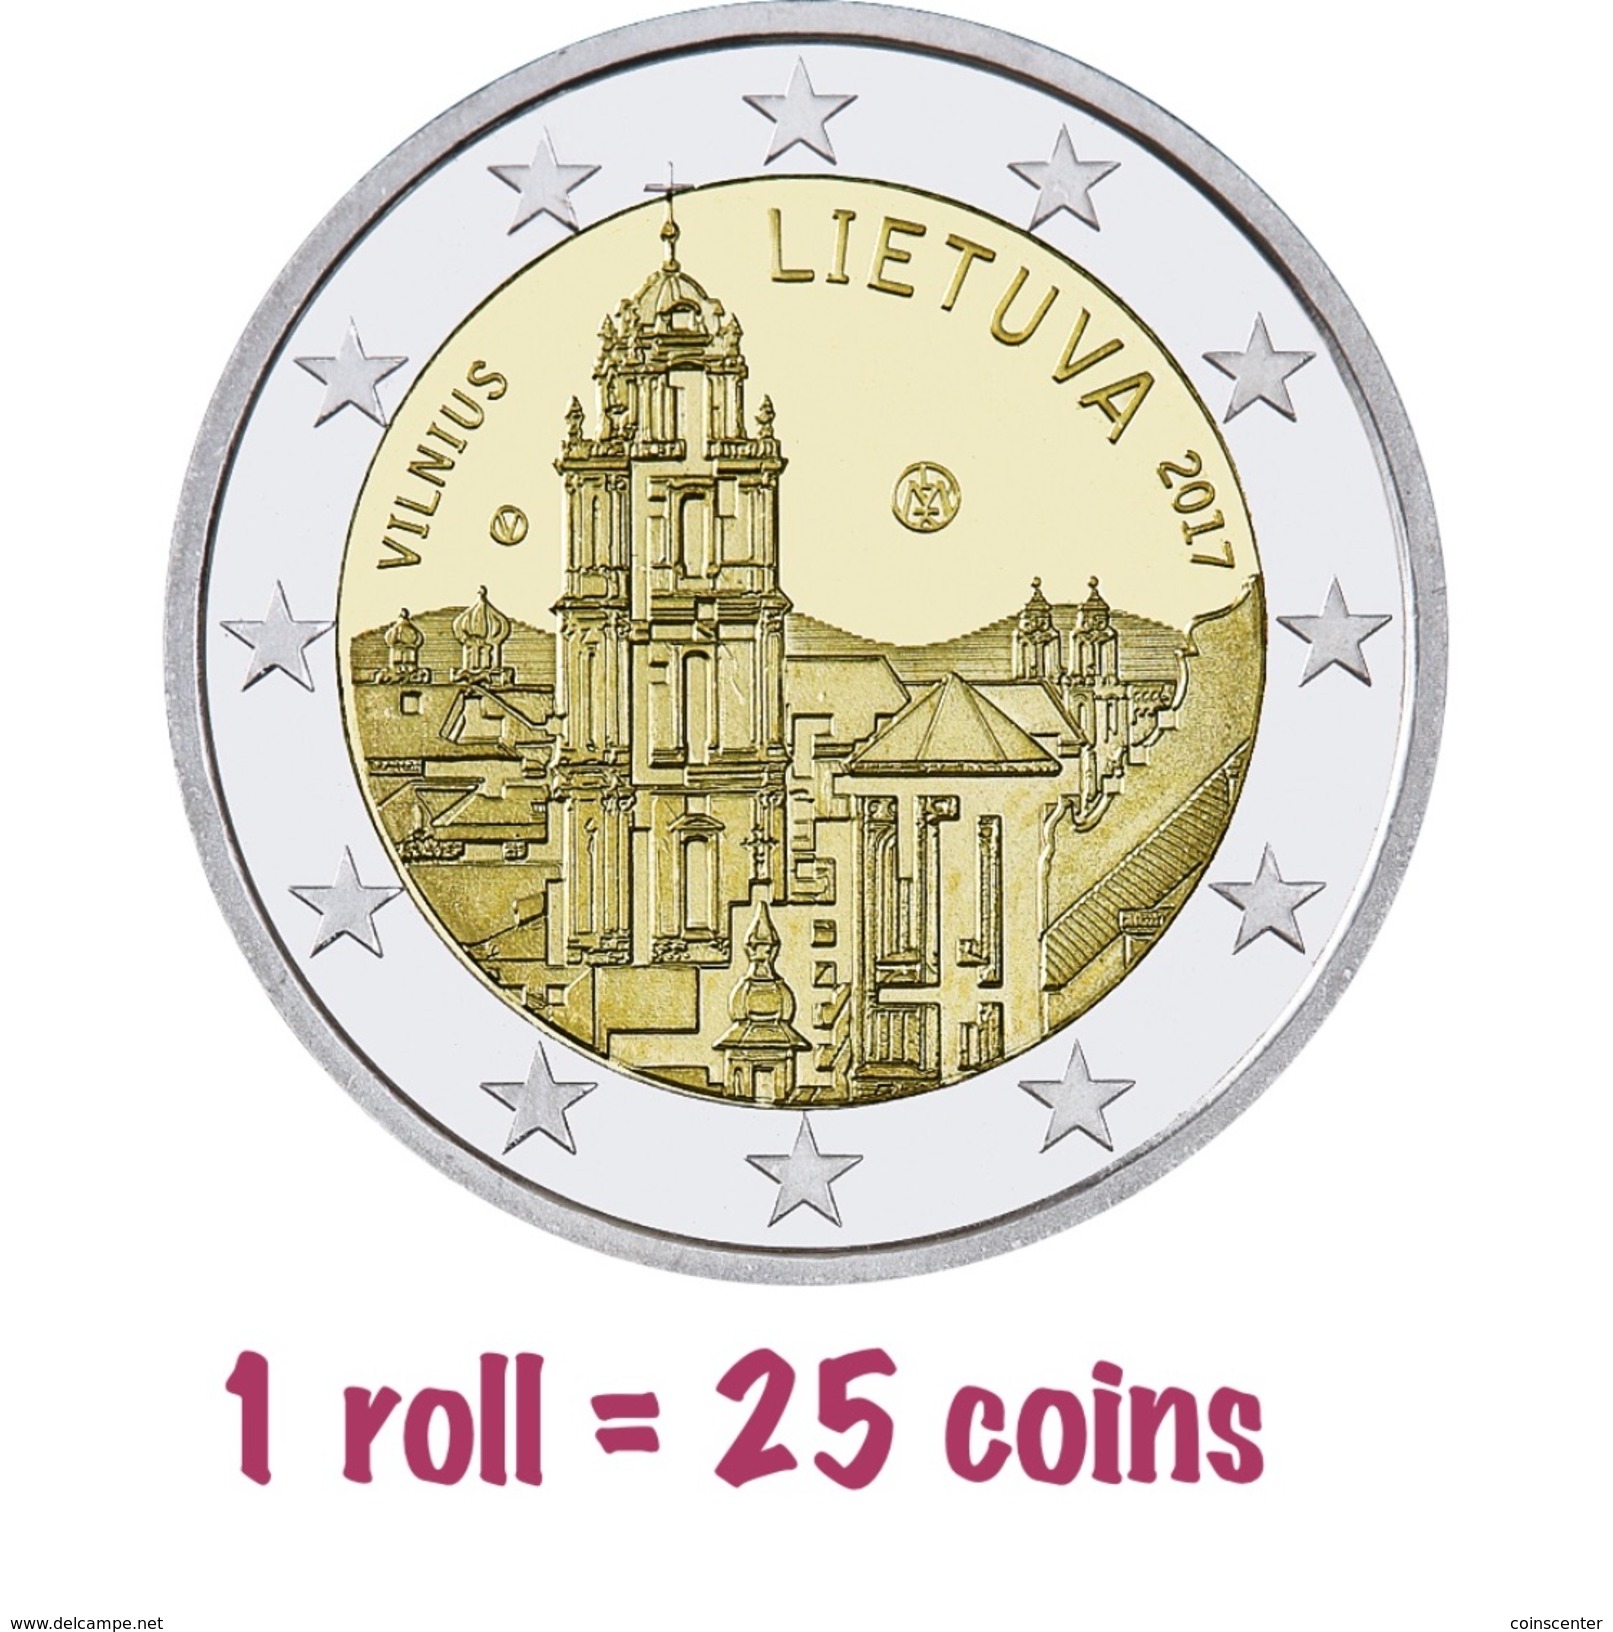 WHOLESALE (1 Roll = 25 Coins): Lithuania 2 Euro 2017 "Vilnius" BiMetallic UNC - Litauen